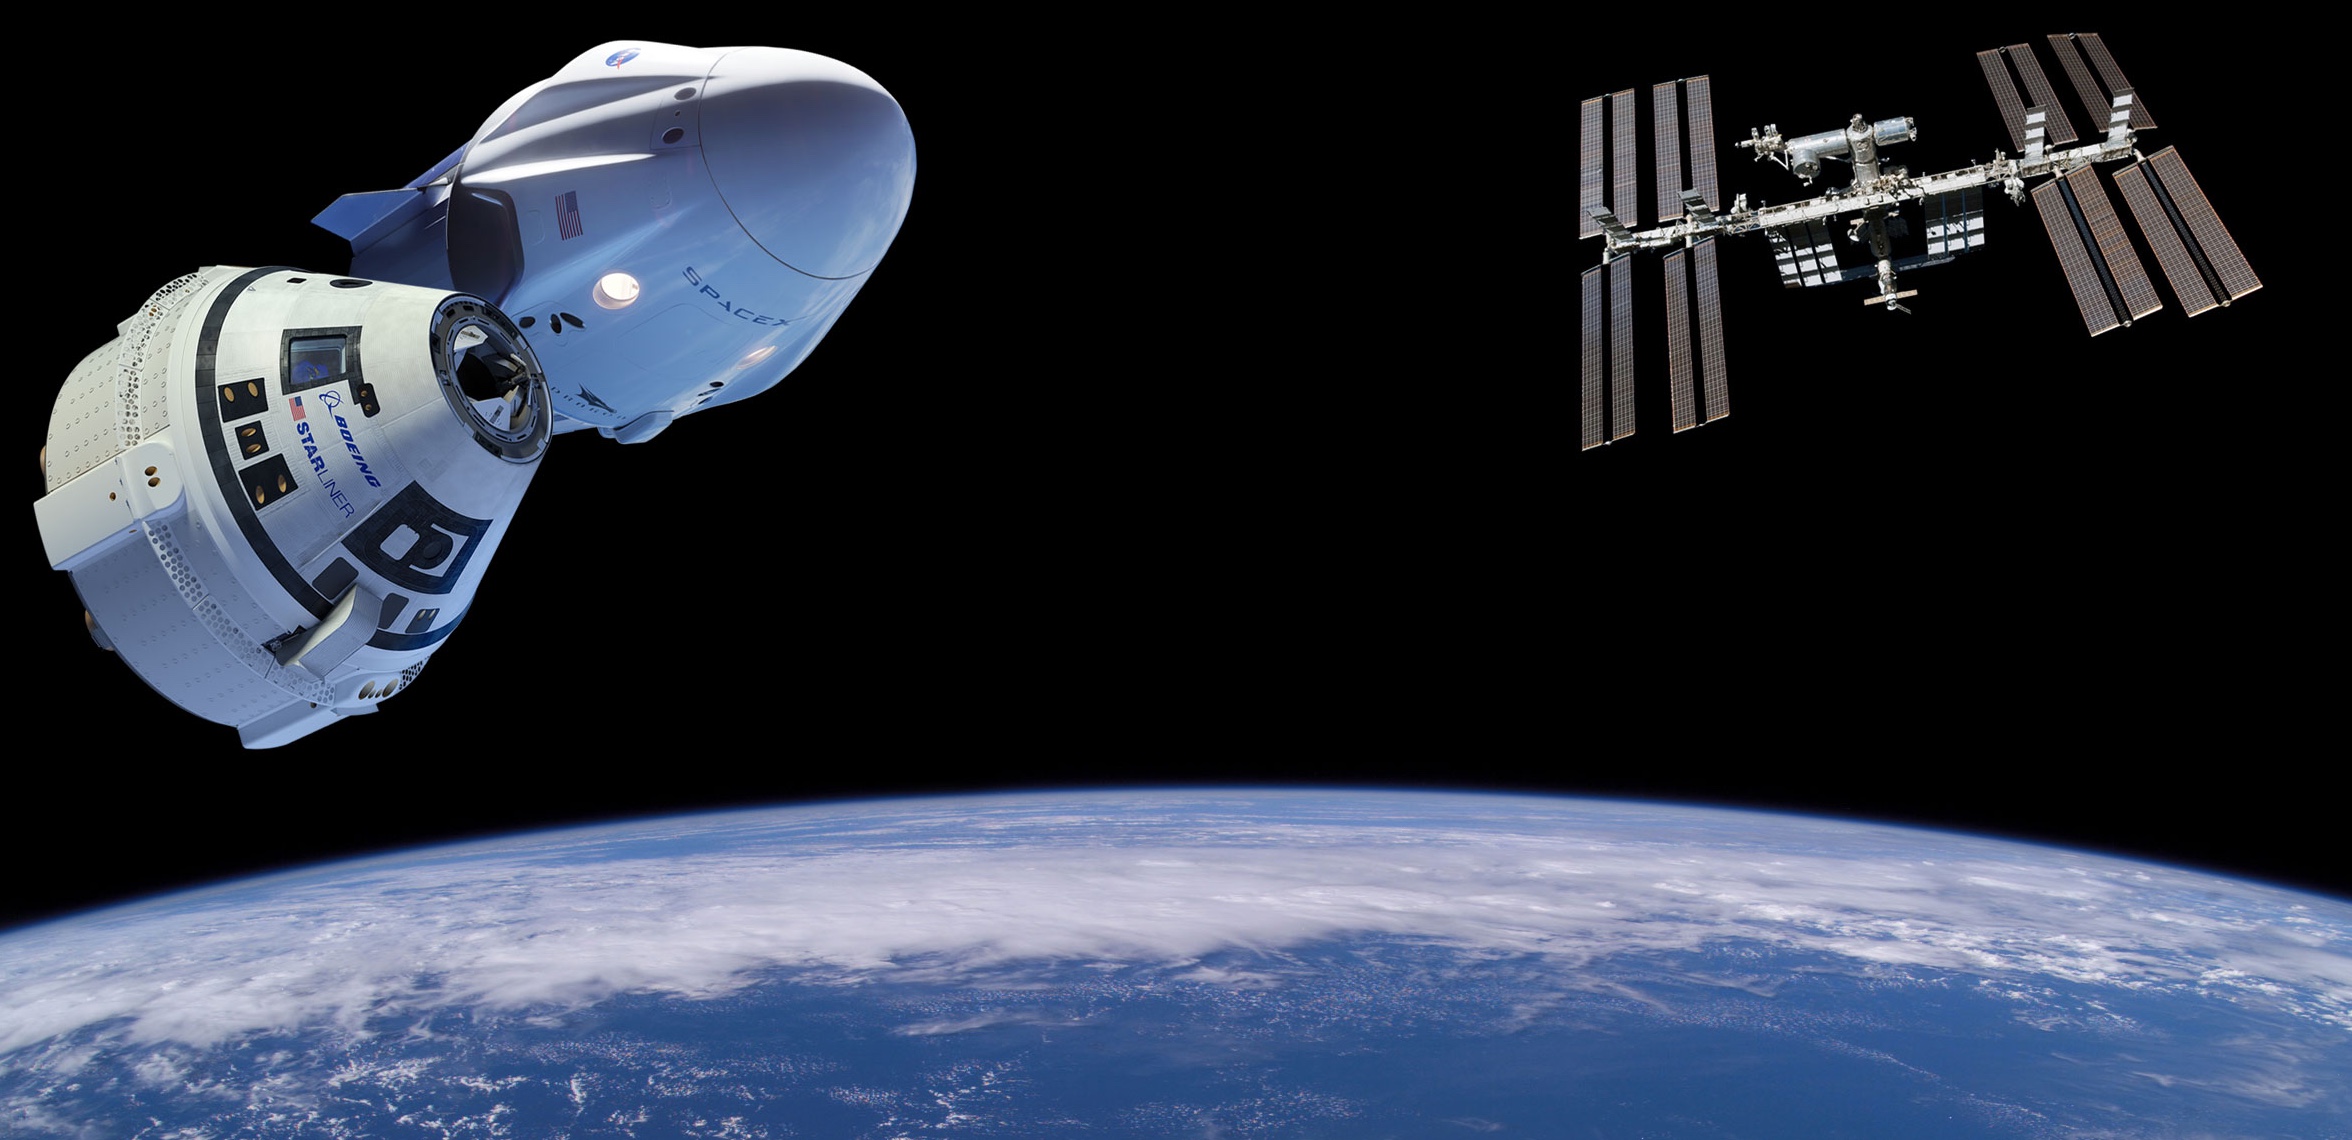 SpaceX’s Crew Dragon makes its first orbital launch tonight - Josh Loe2352 x 1140